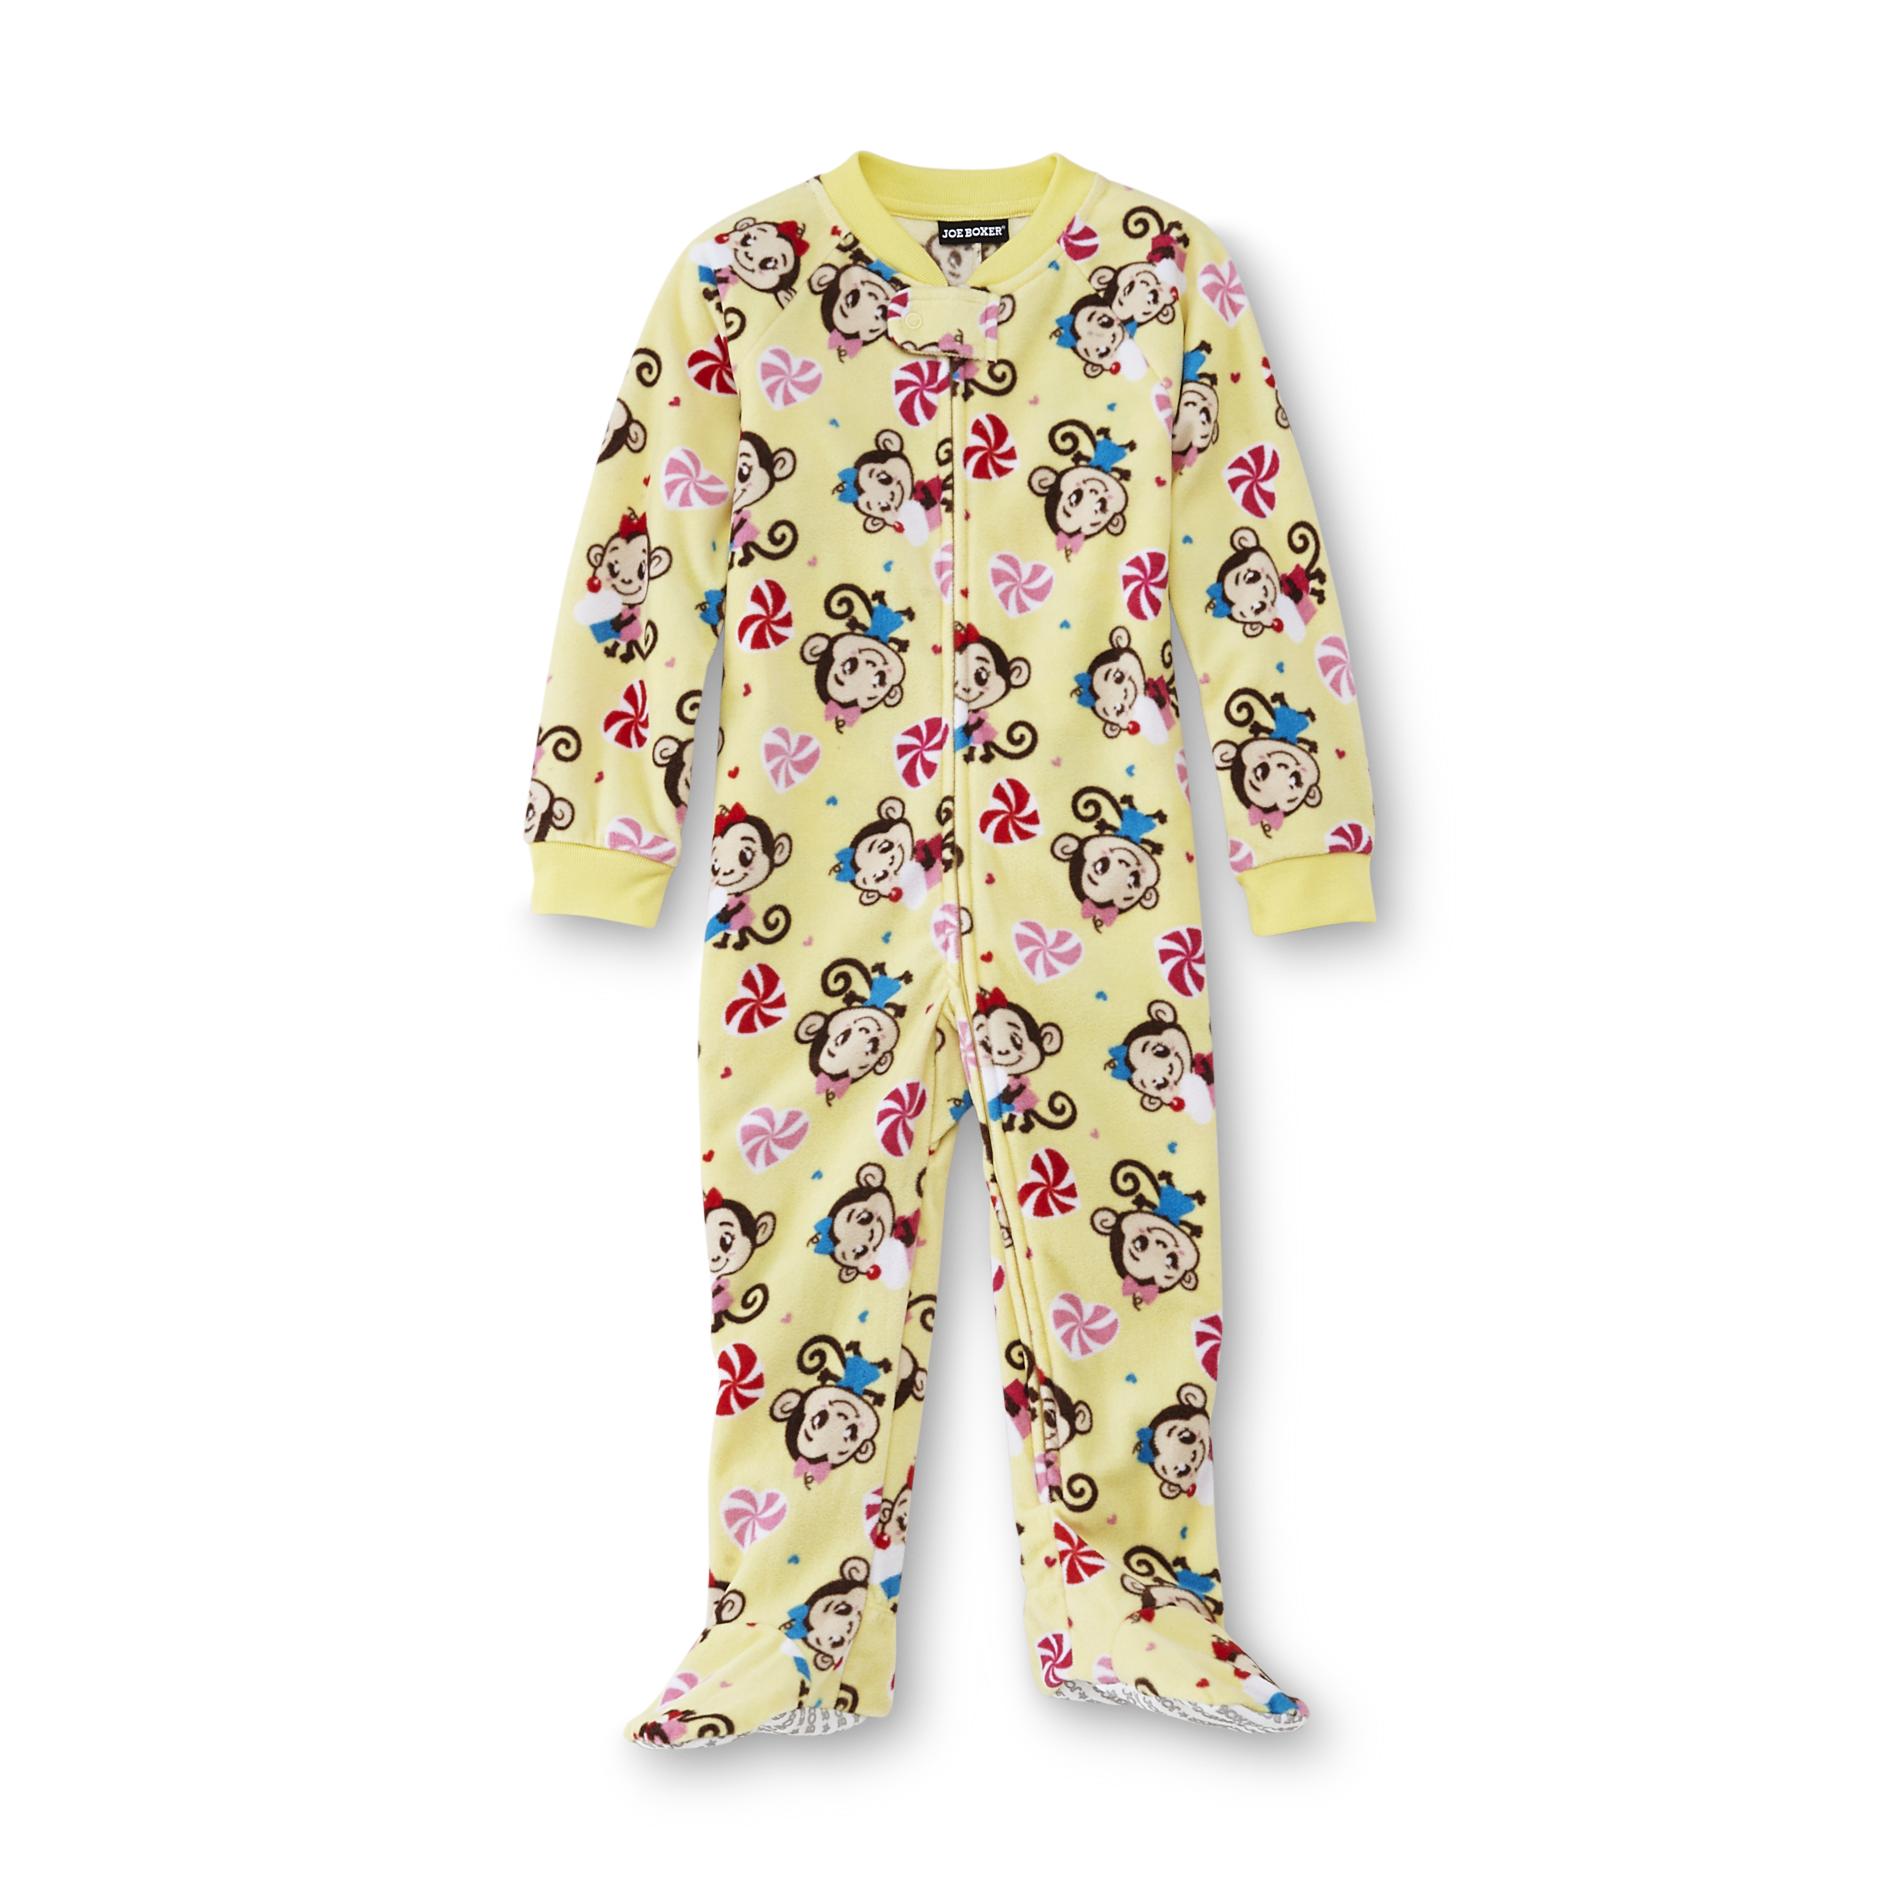 Joe Boxer Infant & Toddler Girl's Fleece Footed Pajamas - Monkeys